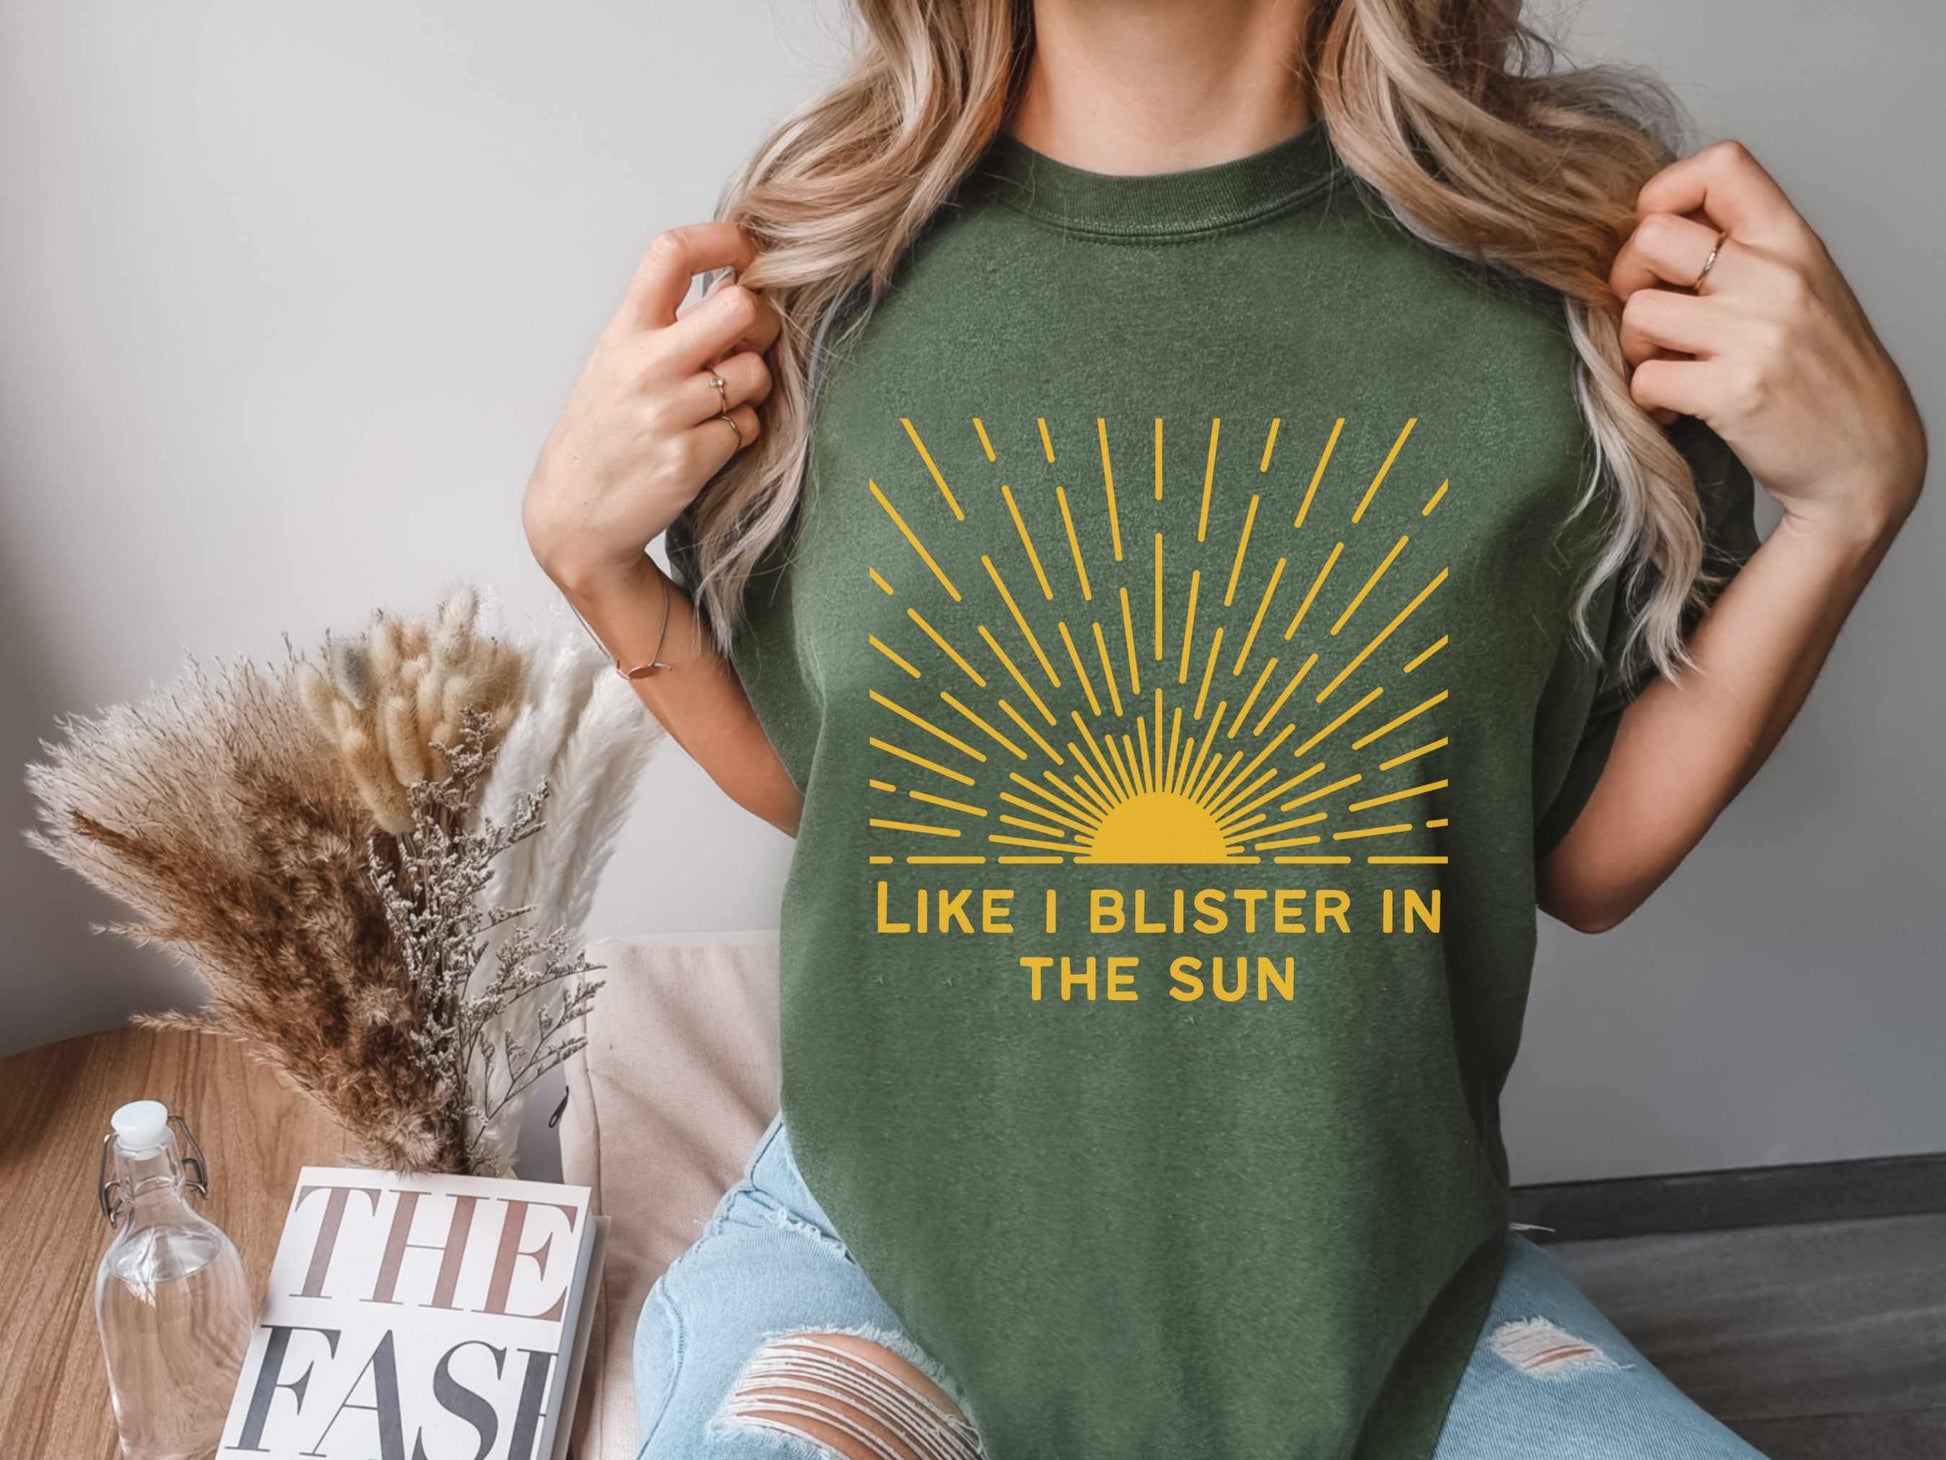 Violent Femmes "Blister in the Sun Tee" T-Shirt in Hemp